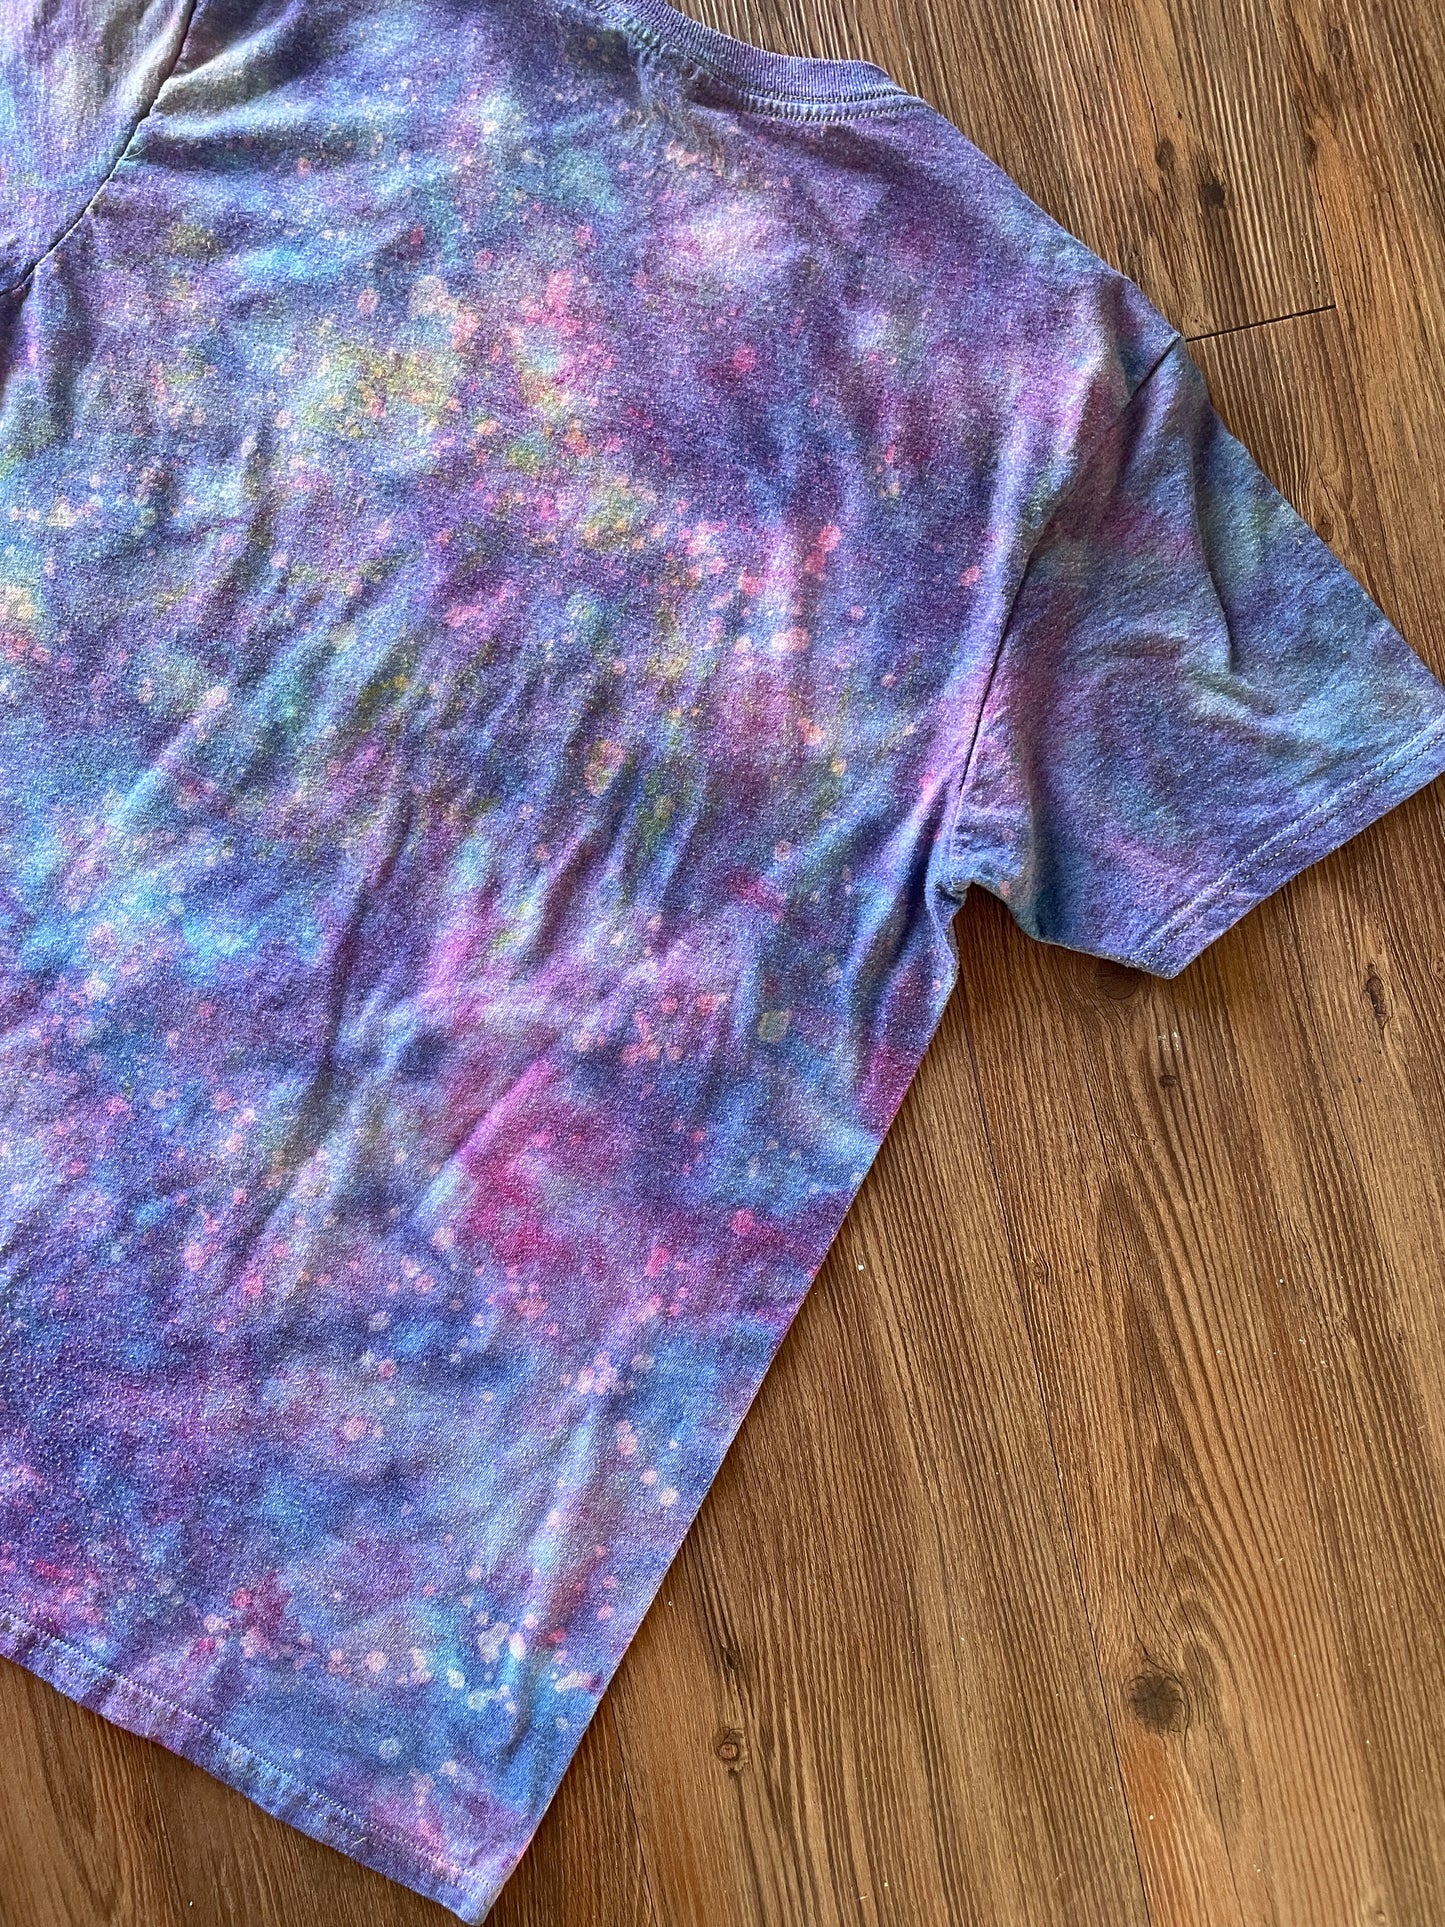 Medium Women’s Save Ferris Handmade Galaxy Tie Dye T-Shirt | Ferris Bueller’s Day Off Reverse Galaxy Short Sleeve